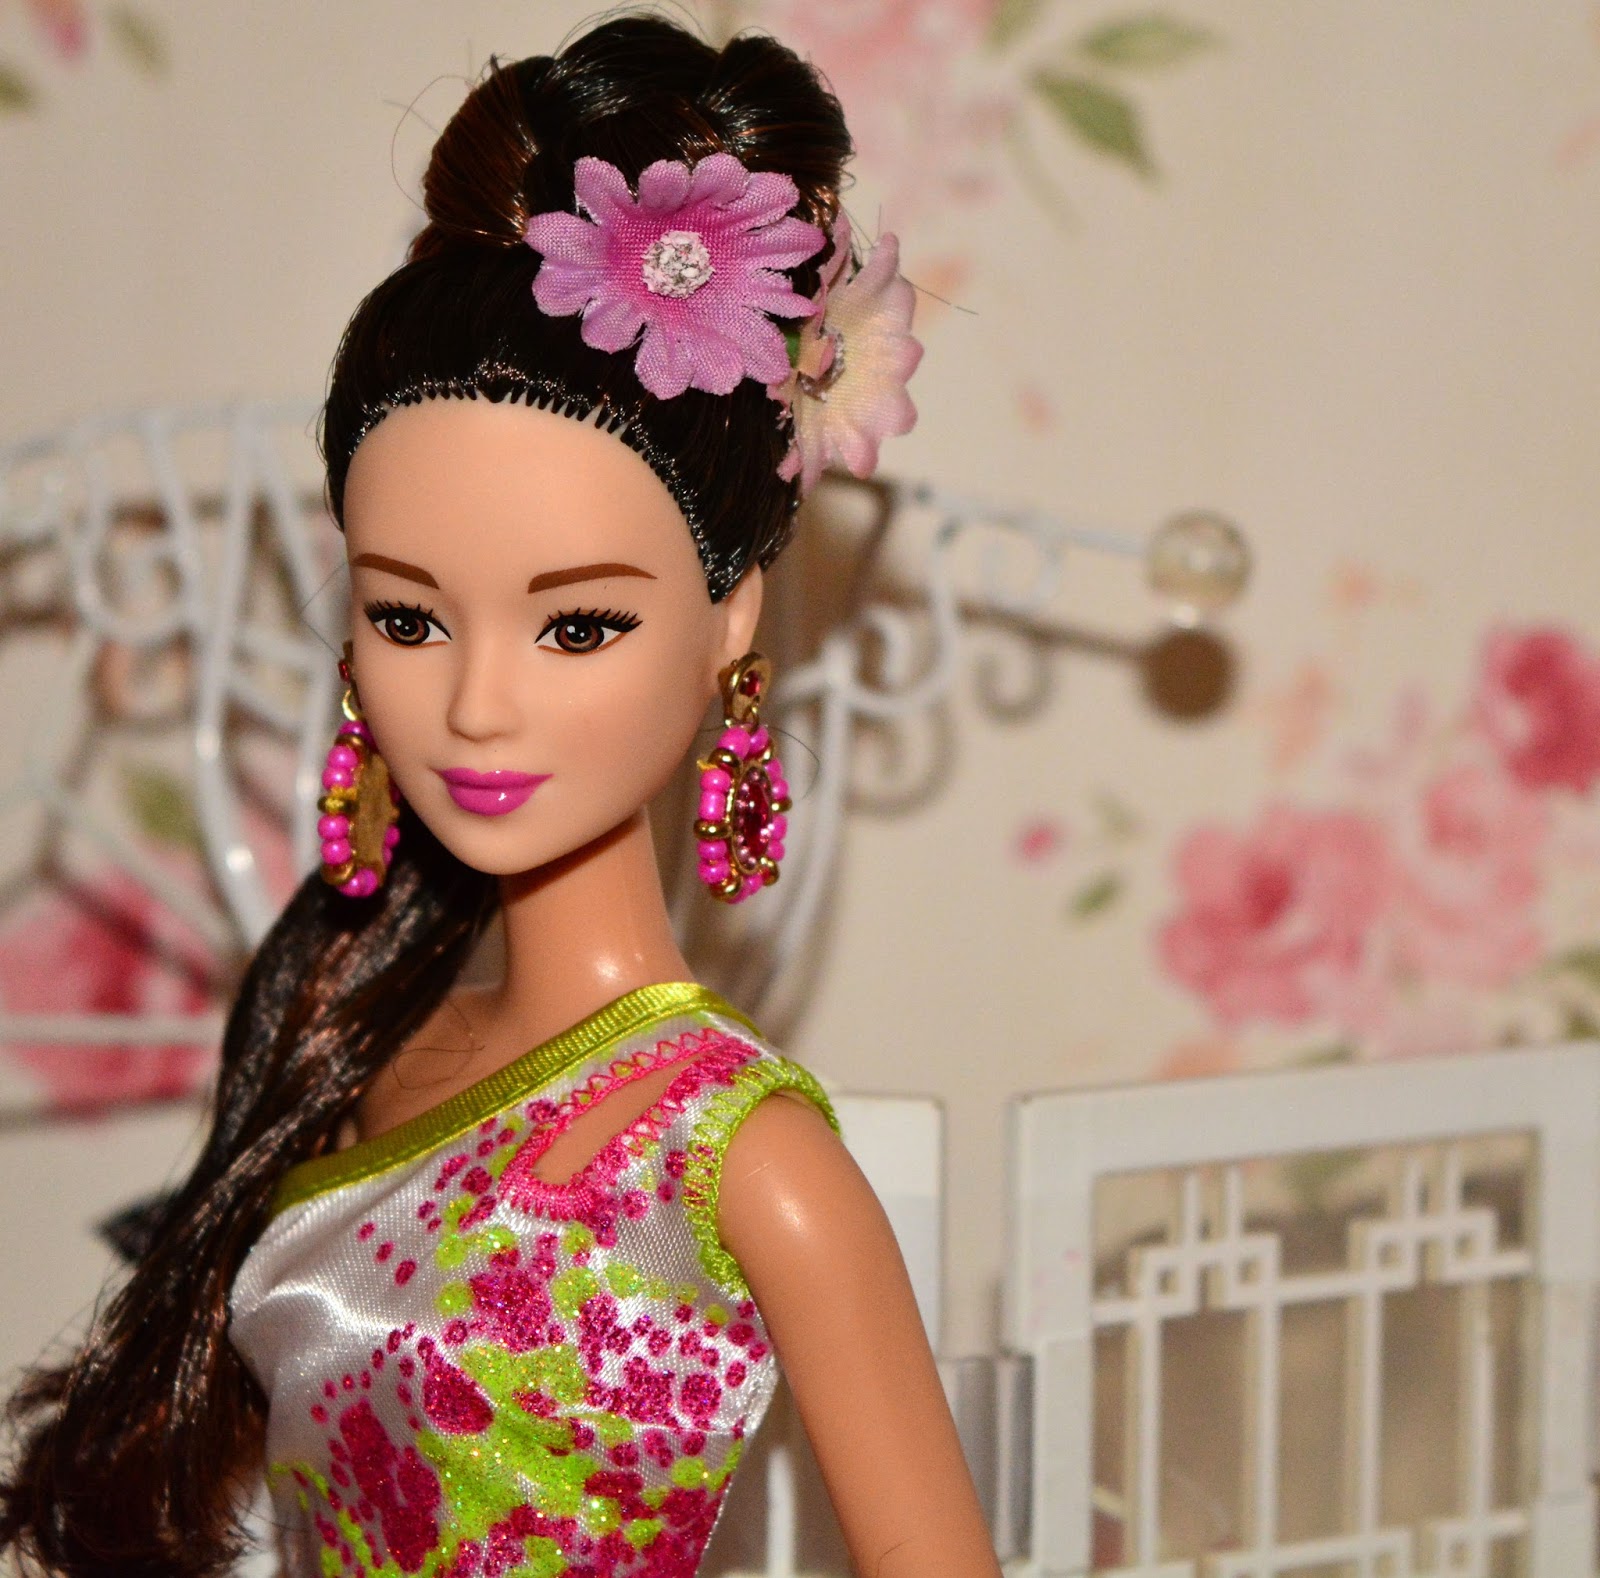 Barbie asia Mattel Admits